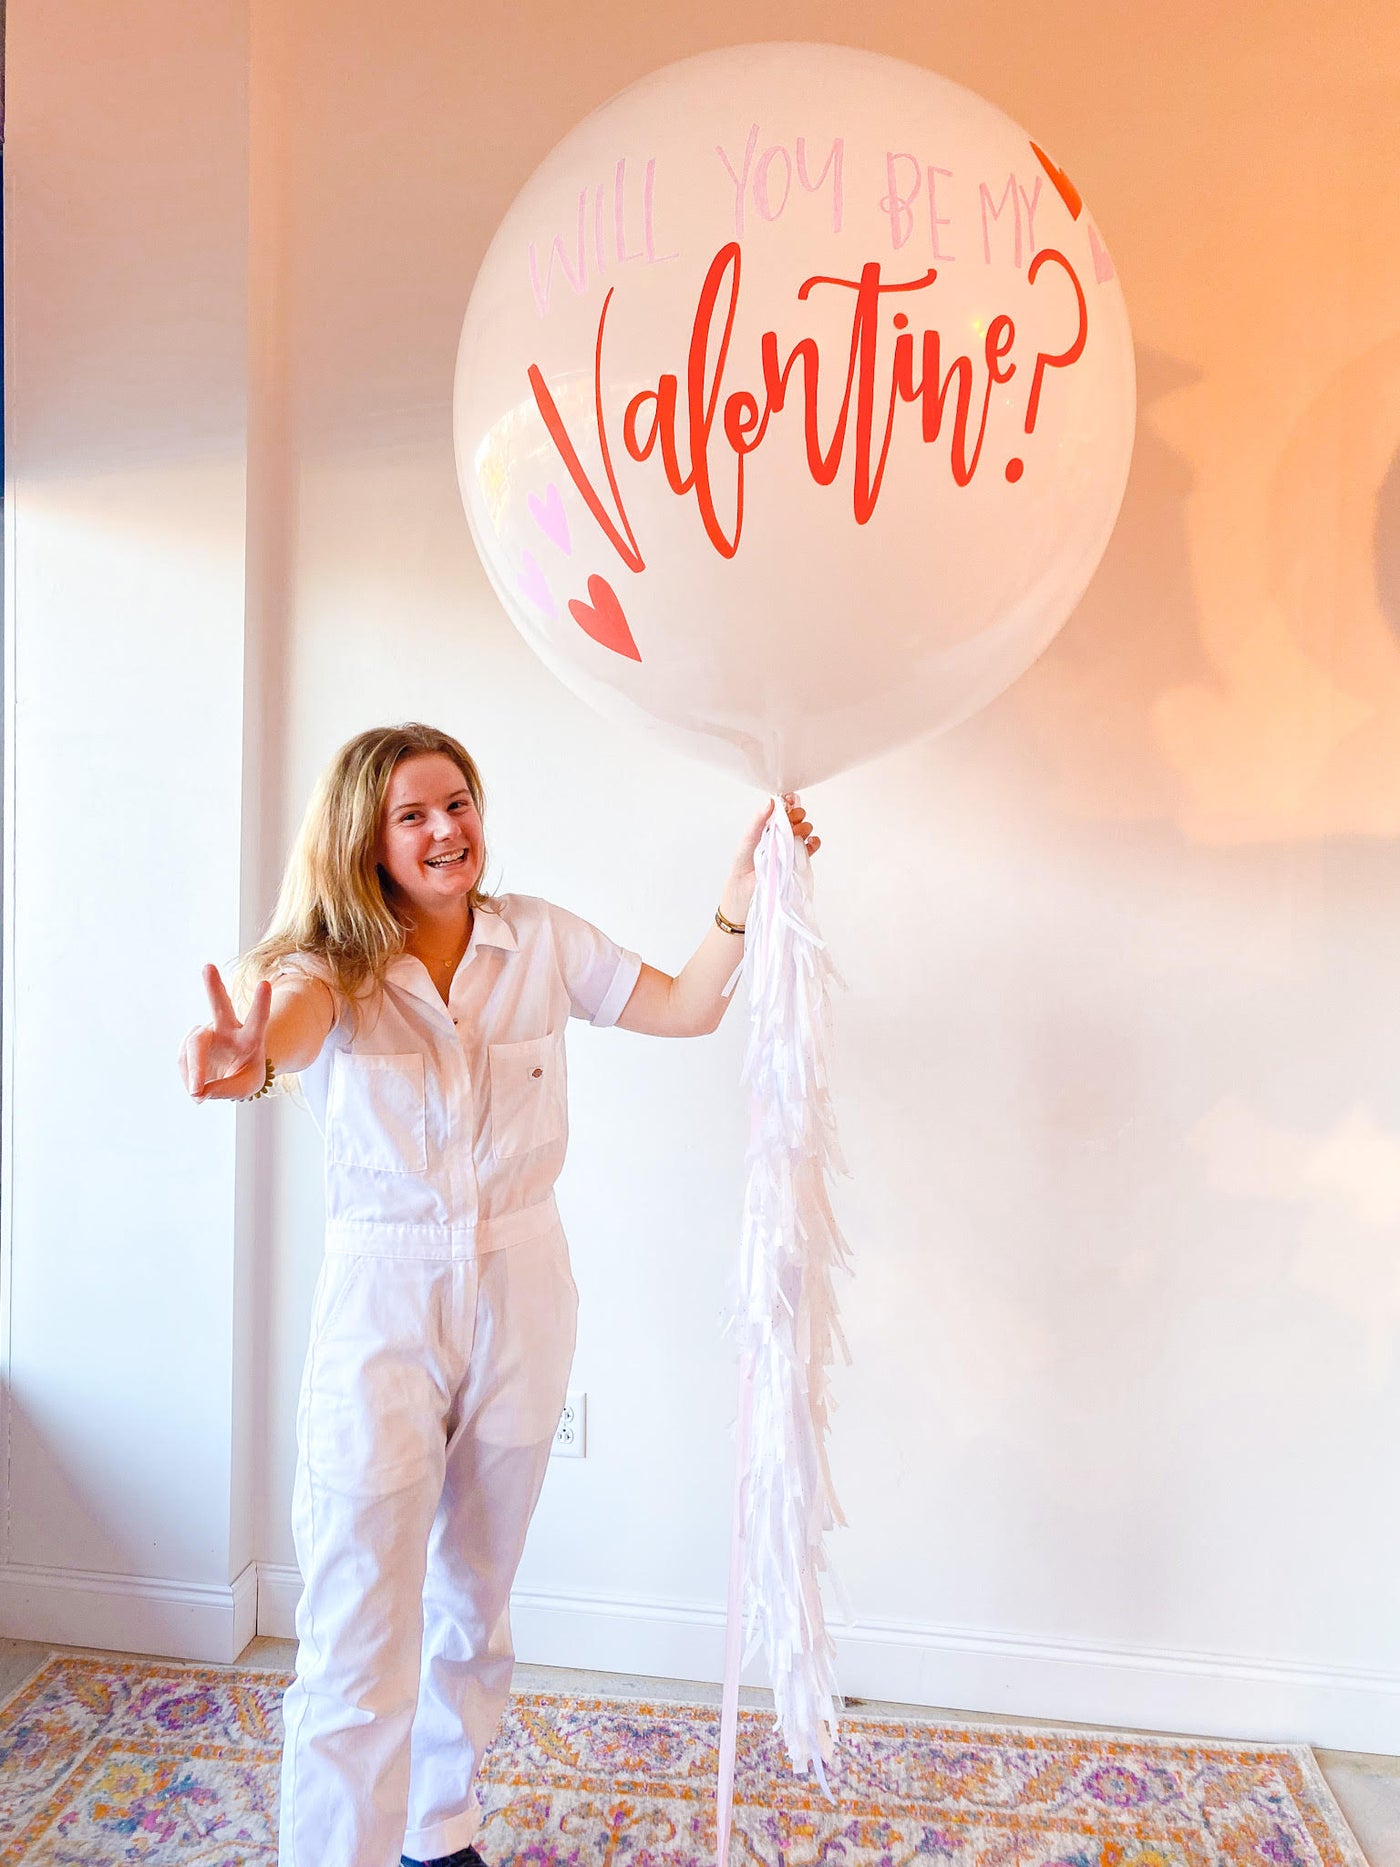 Will You Be My Valentine? Jumbo Balloon with Tassel